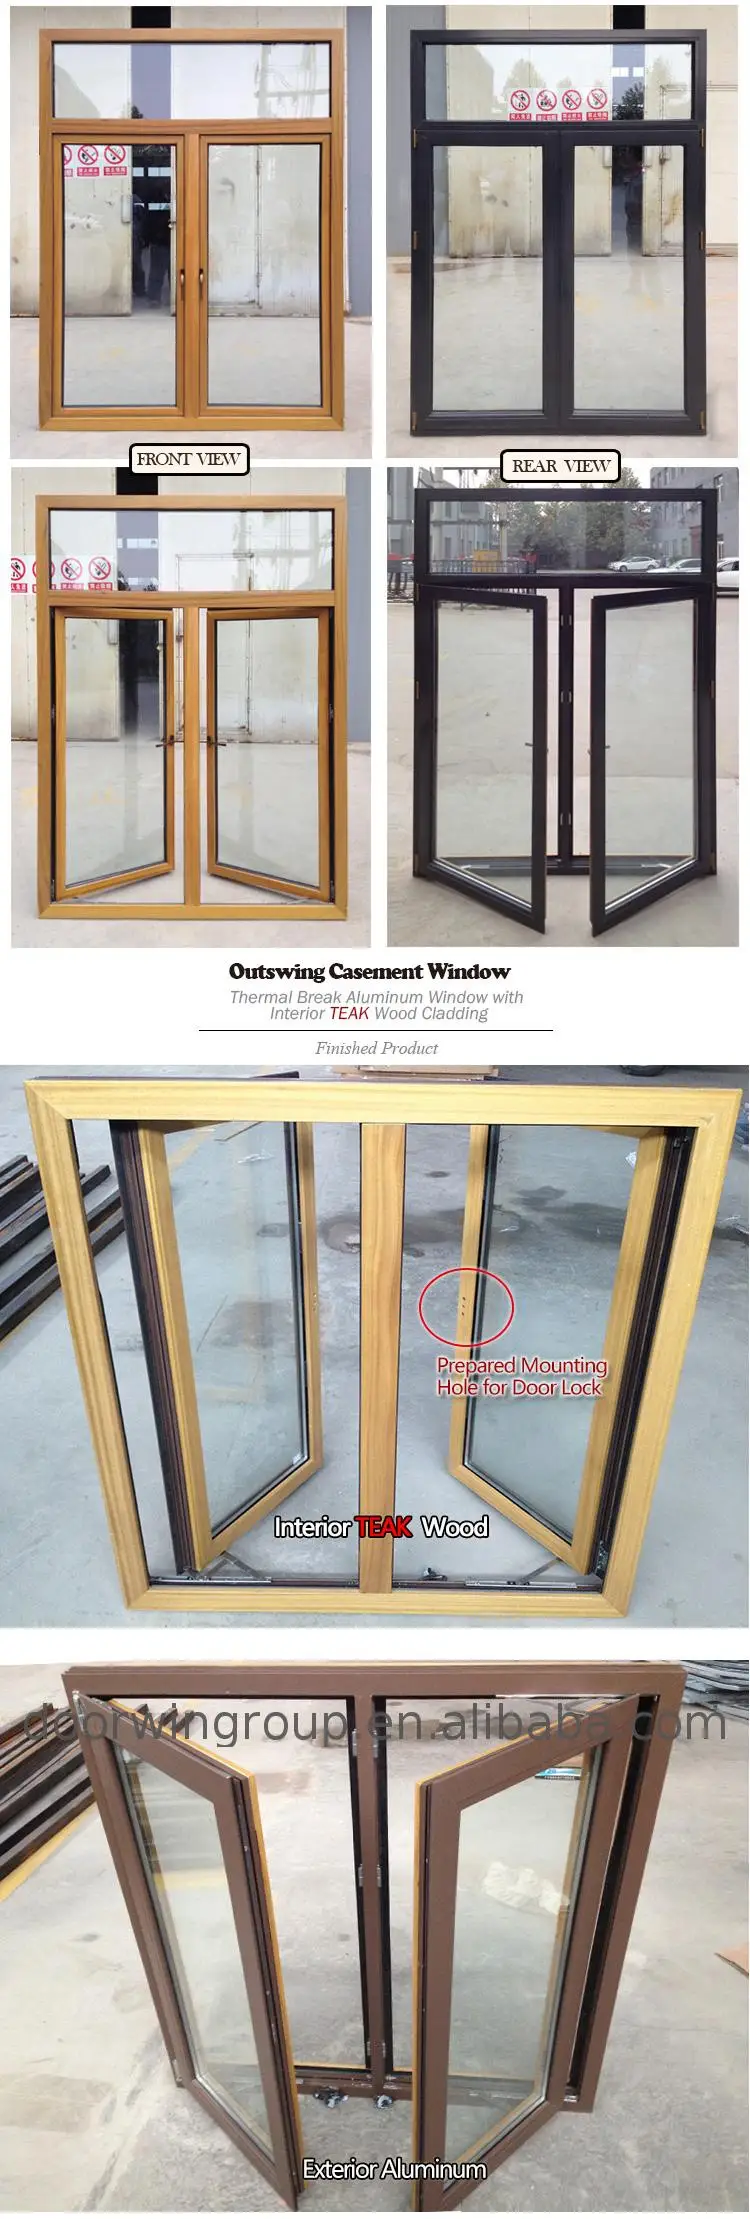 China manufacturer casement window and doors buy timber windows online